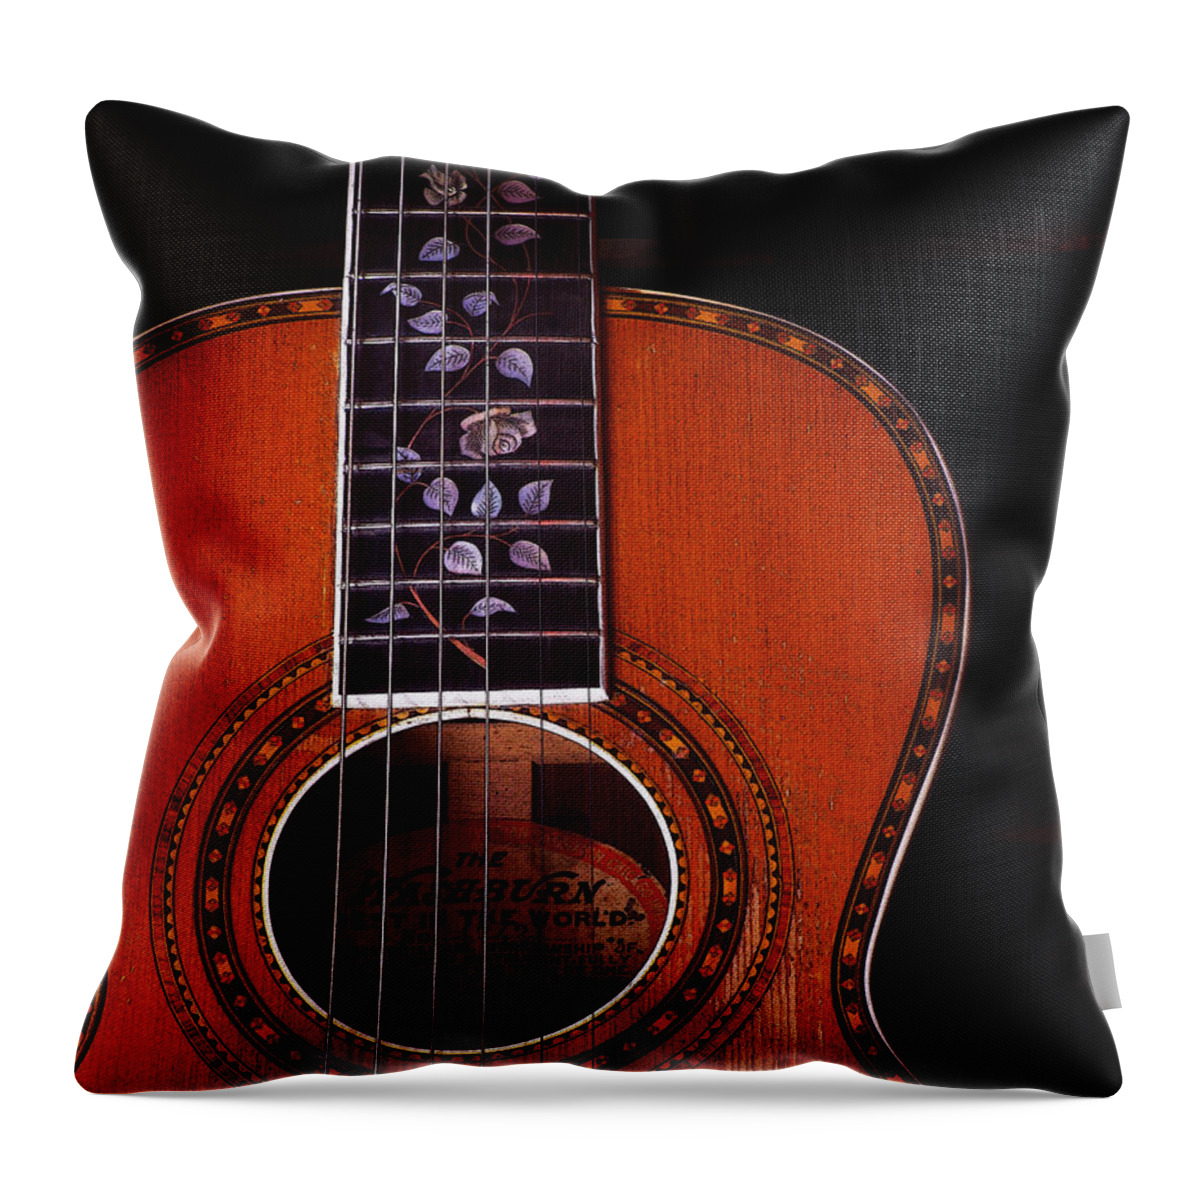 Guitar Throw Pillow featuring the photograph Washburn Guitar by Jim Mathis